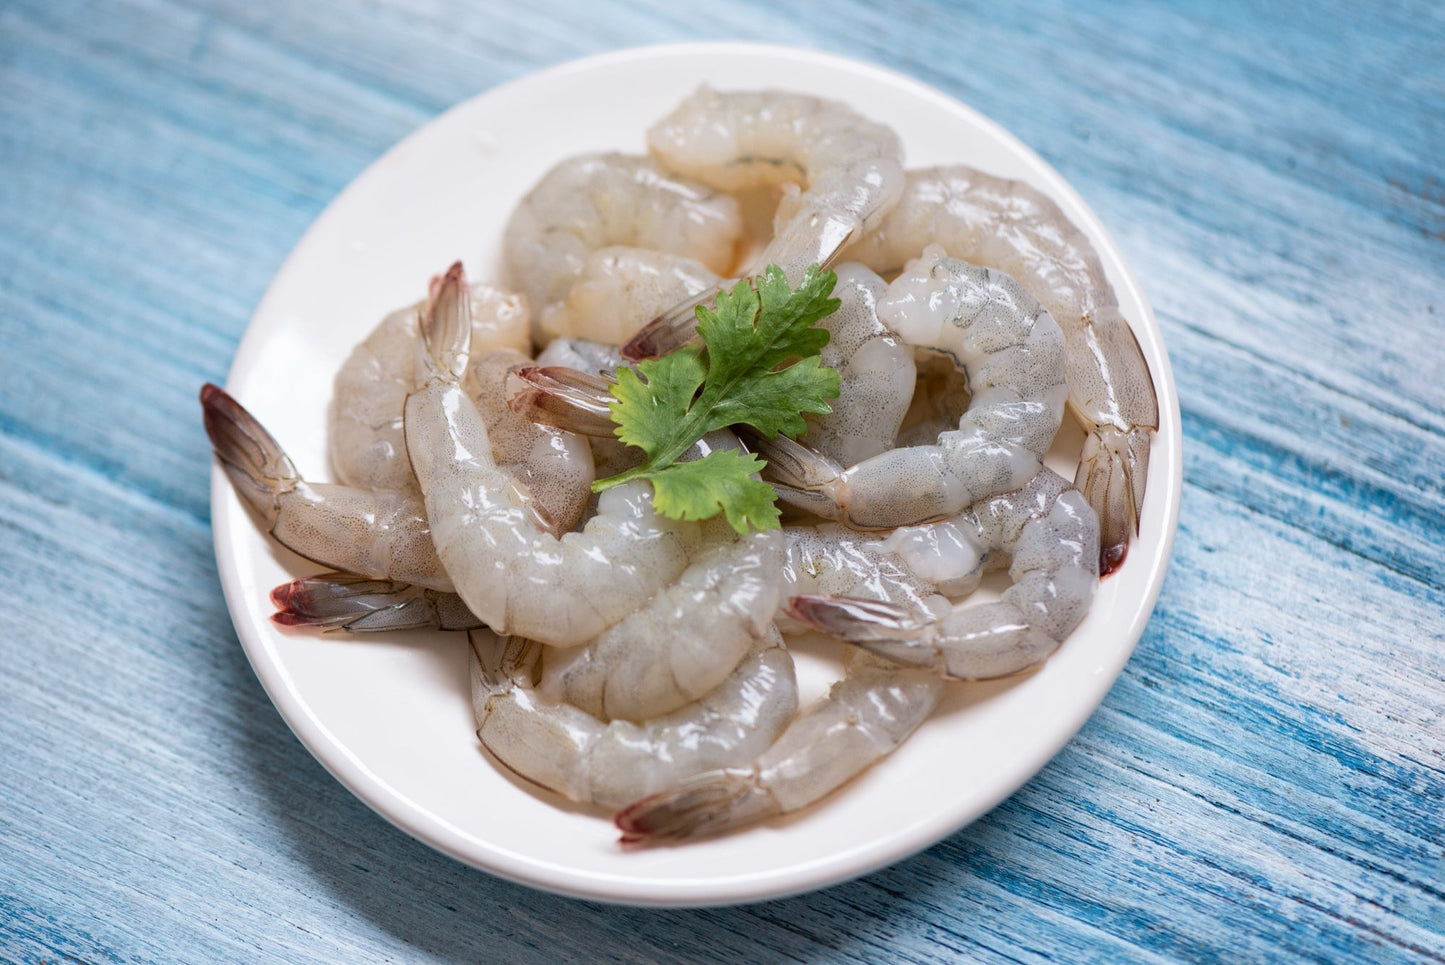 Alaskan Halibut 2 lbs And Gourmet White Shrimp 2 lbs